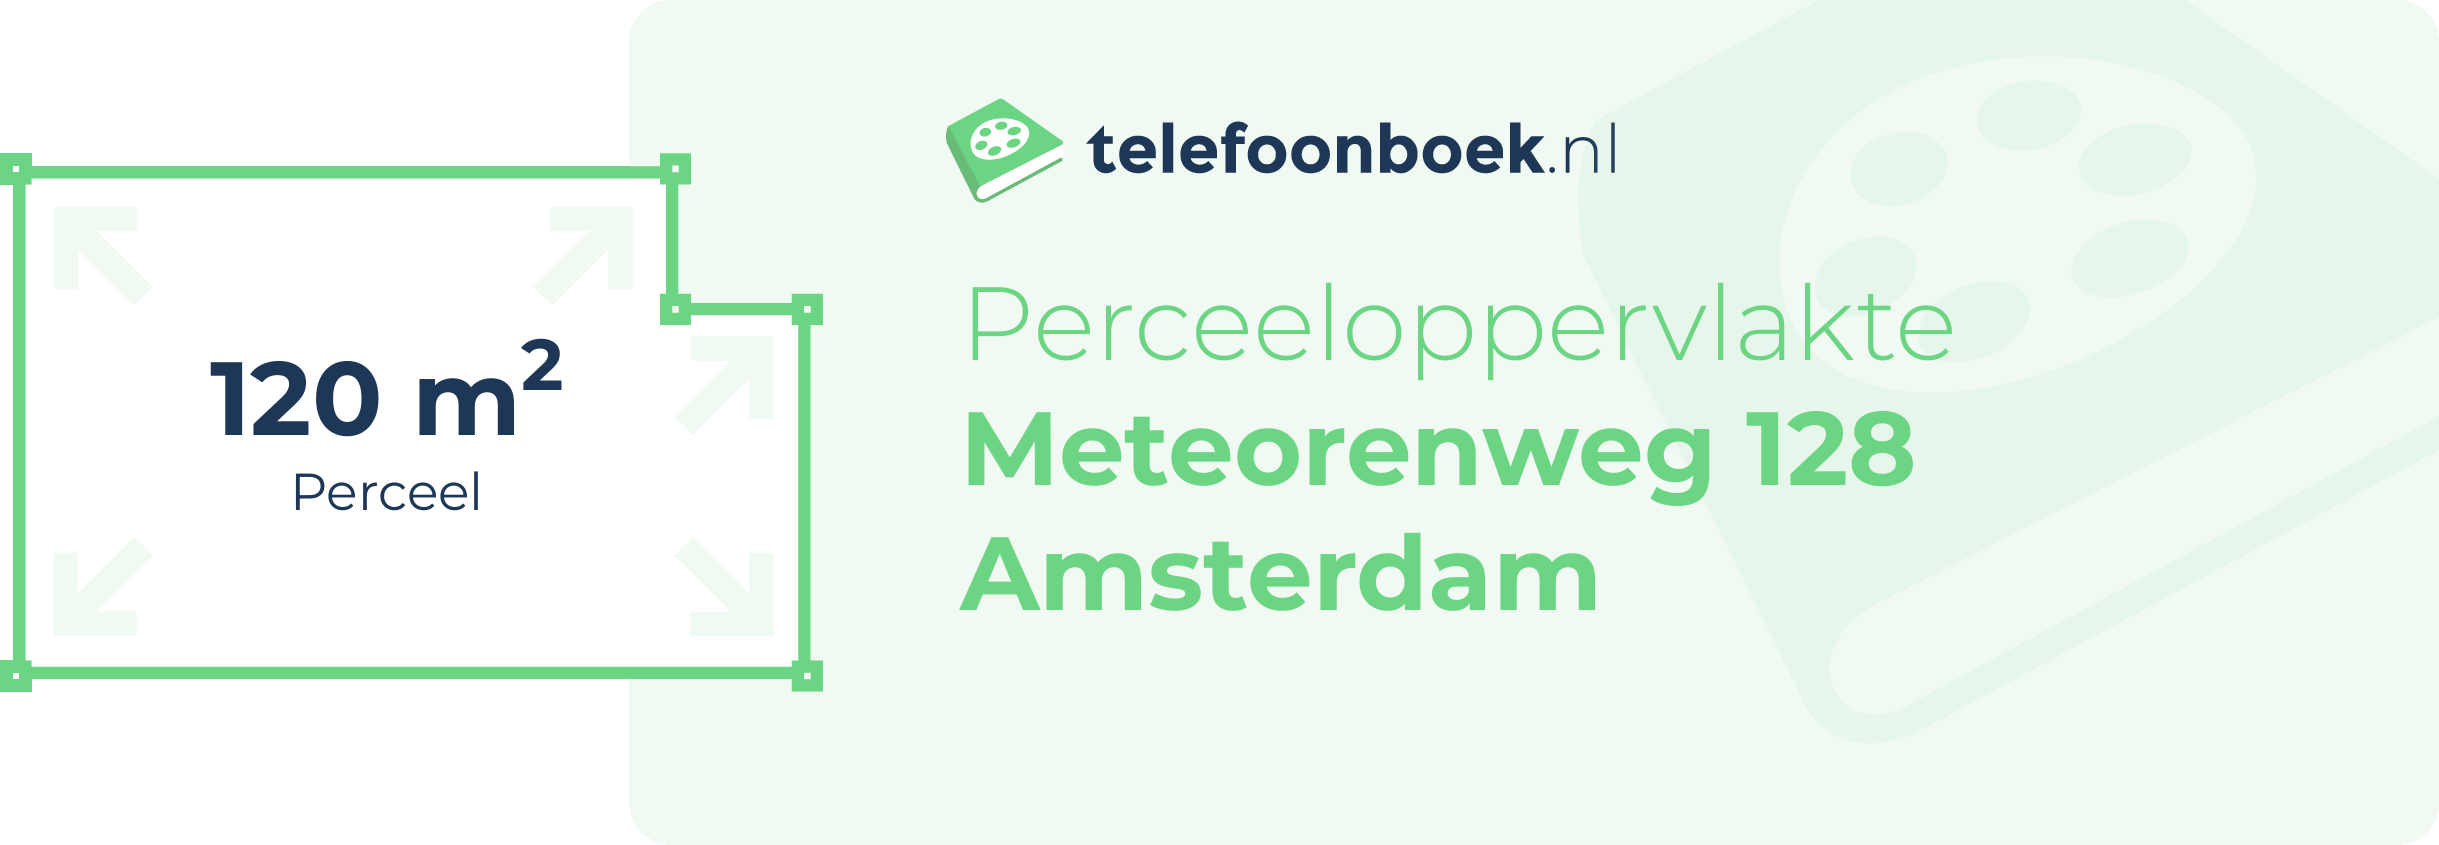 Perceeloppervlakte Meteorenweg 128 Amsterdam